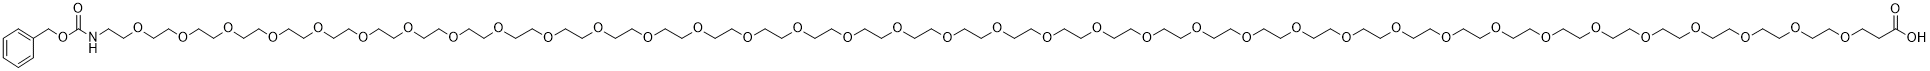 Cbz-N-Amido-PEG36-acid